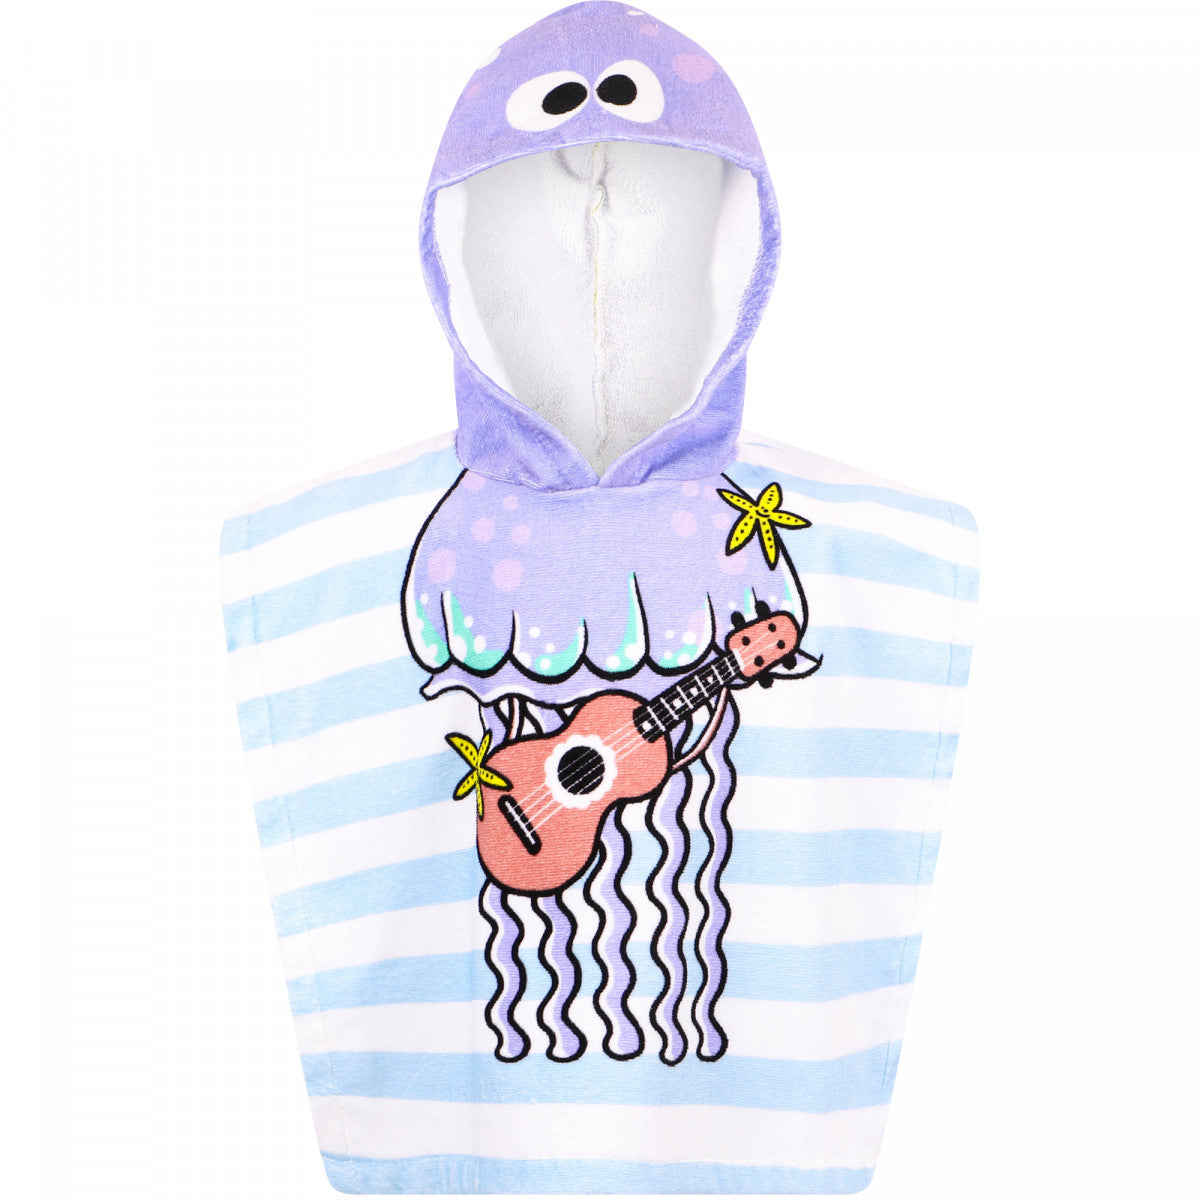 Jellyfish Print Terry Cloth Towel